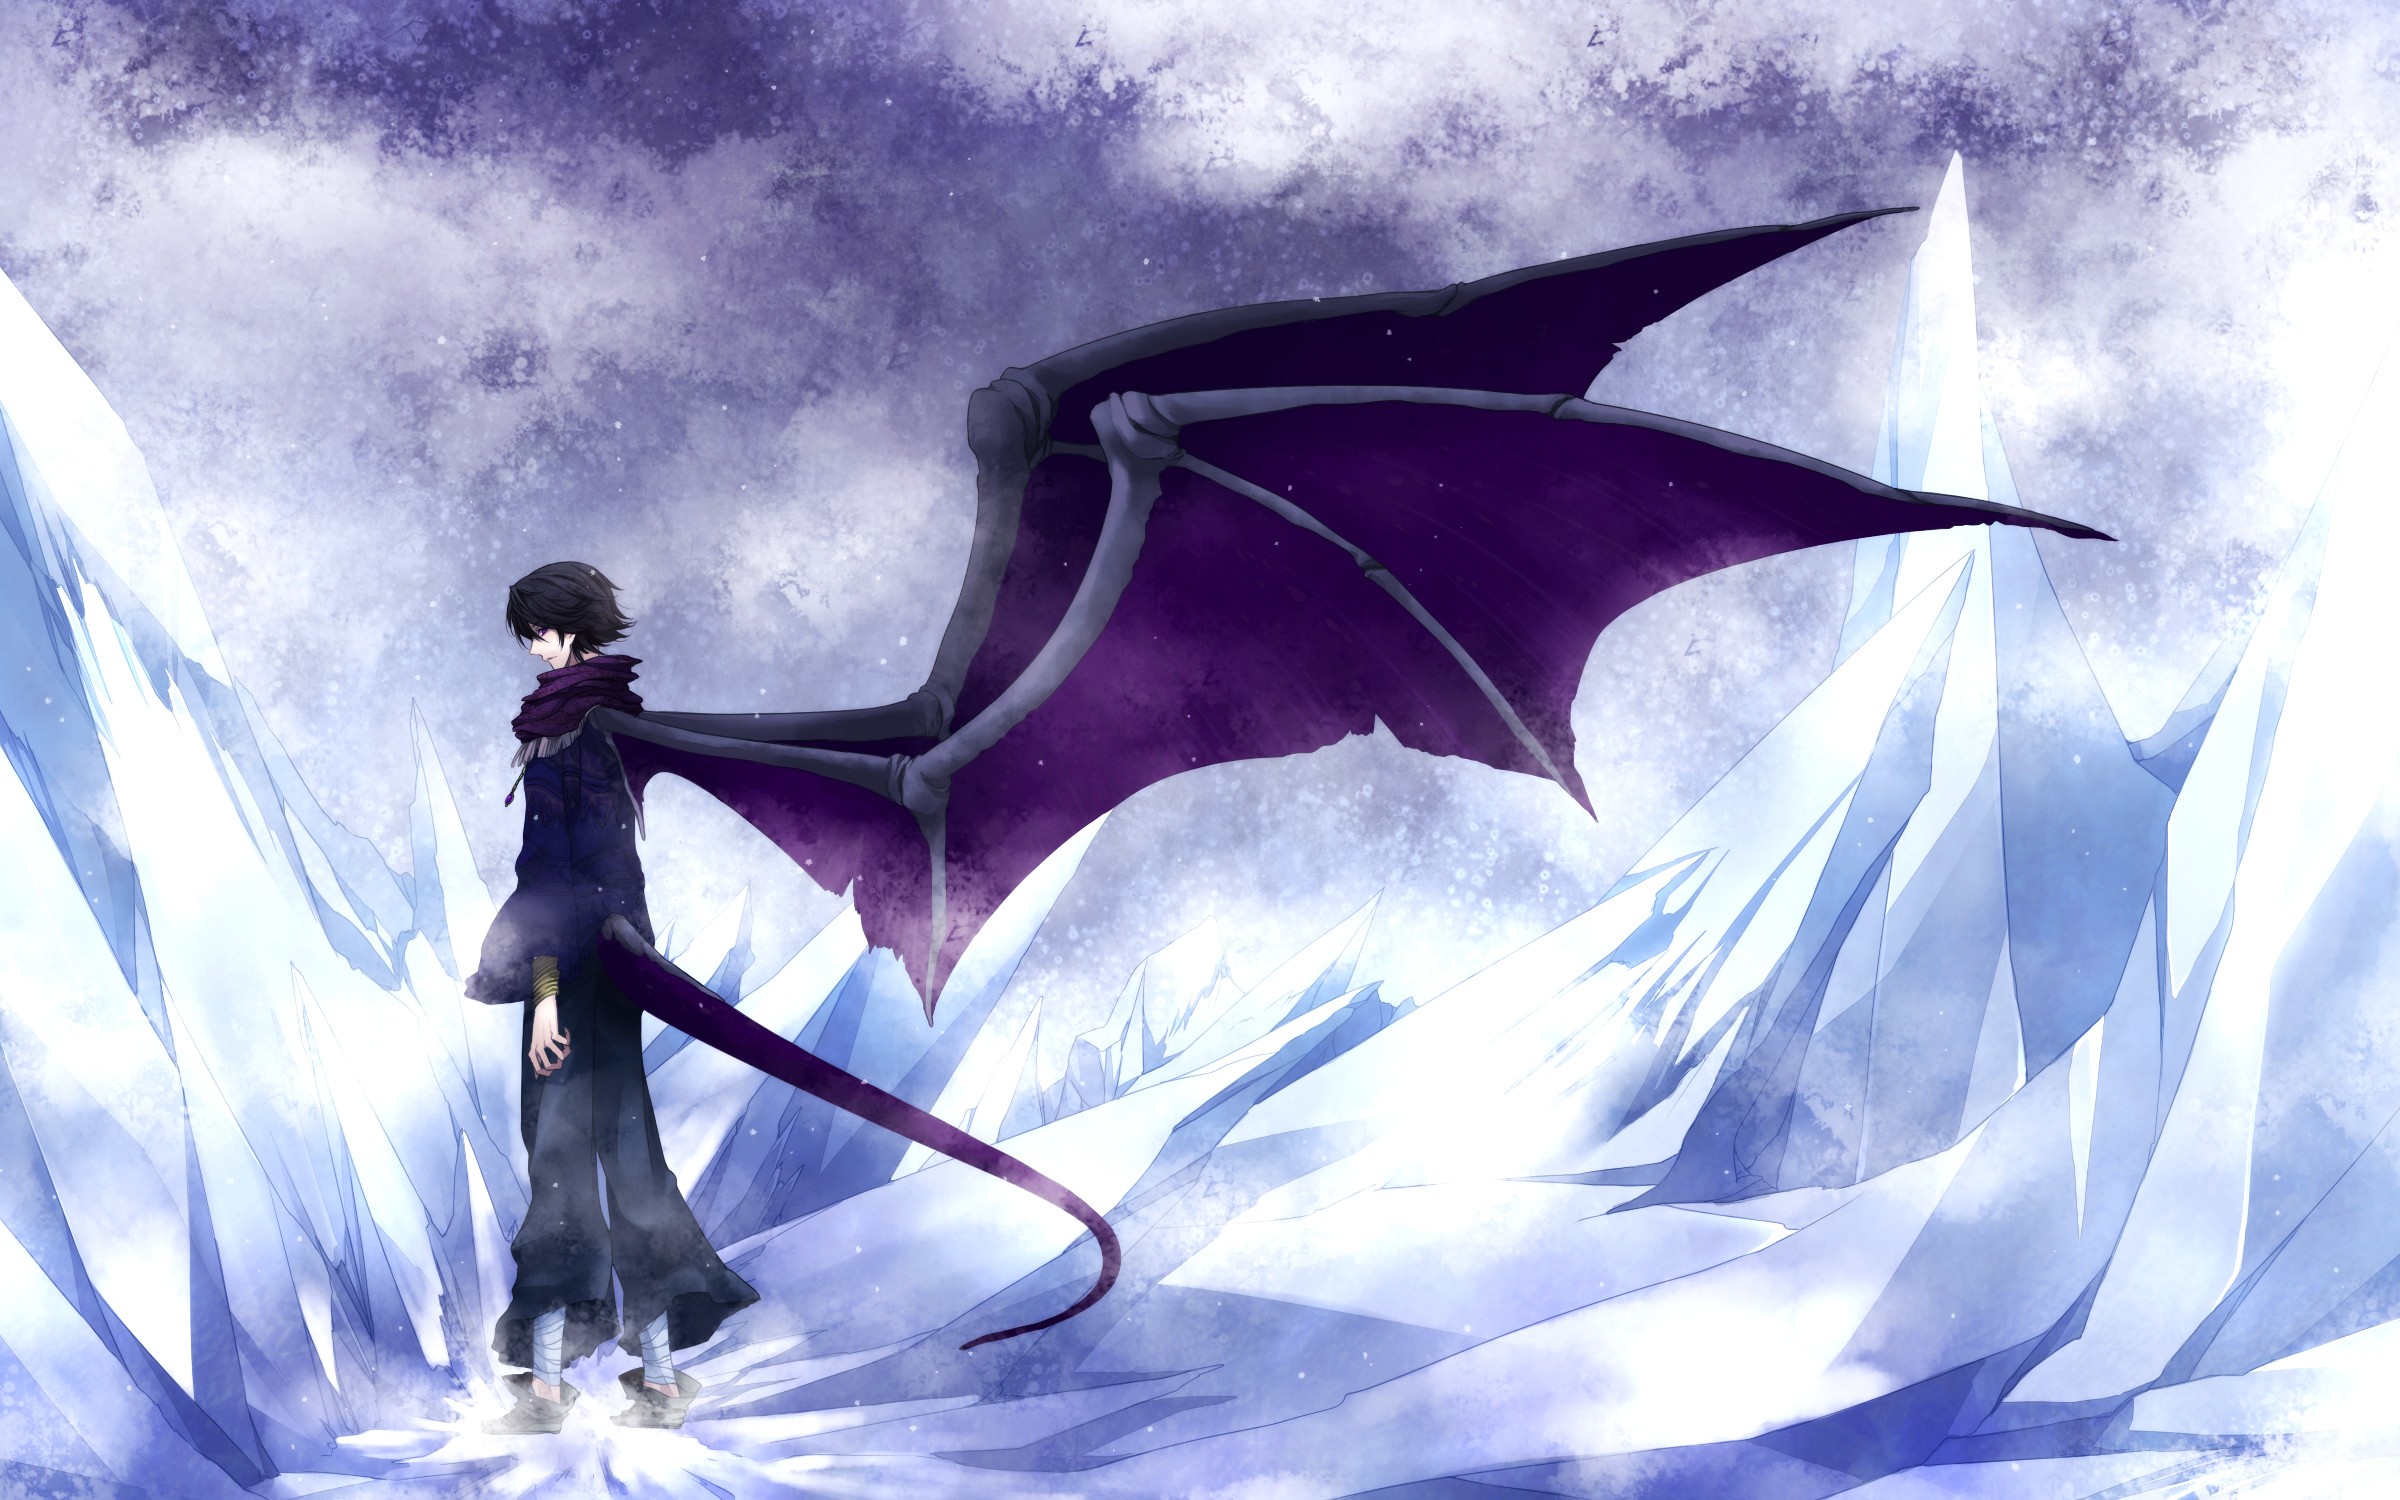 White Ice Dragon Wings - Mabinogi World Wiki